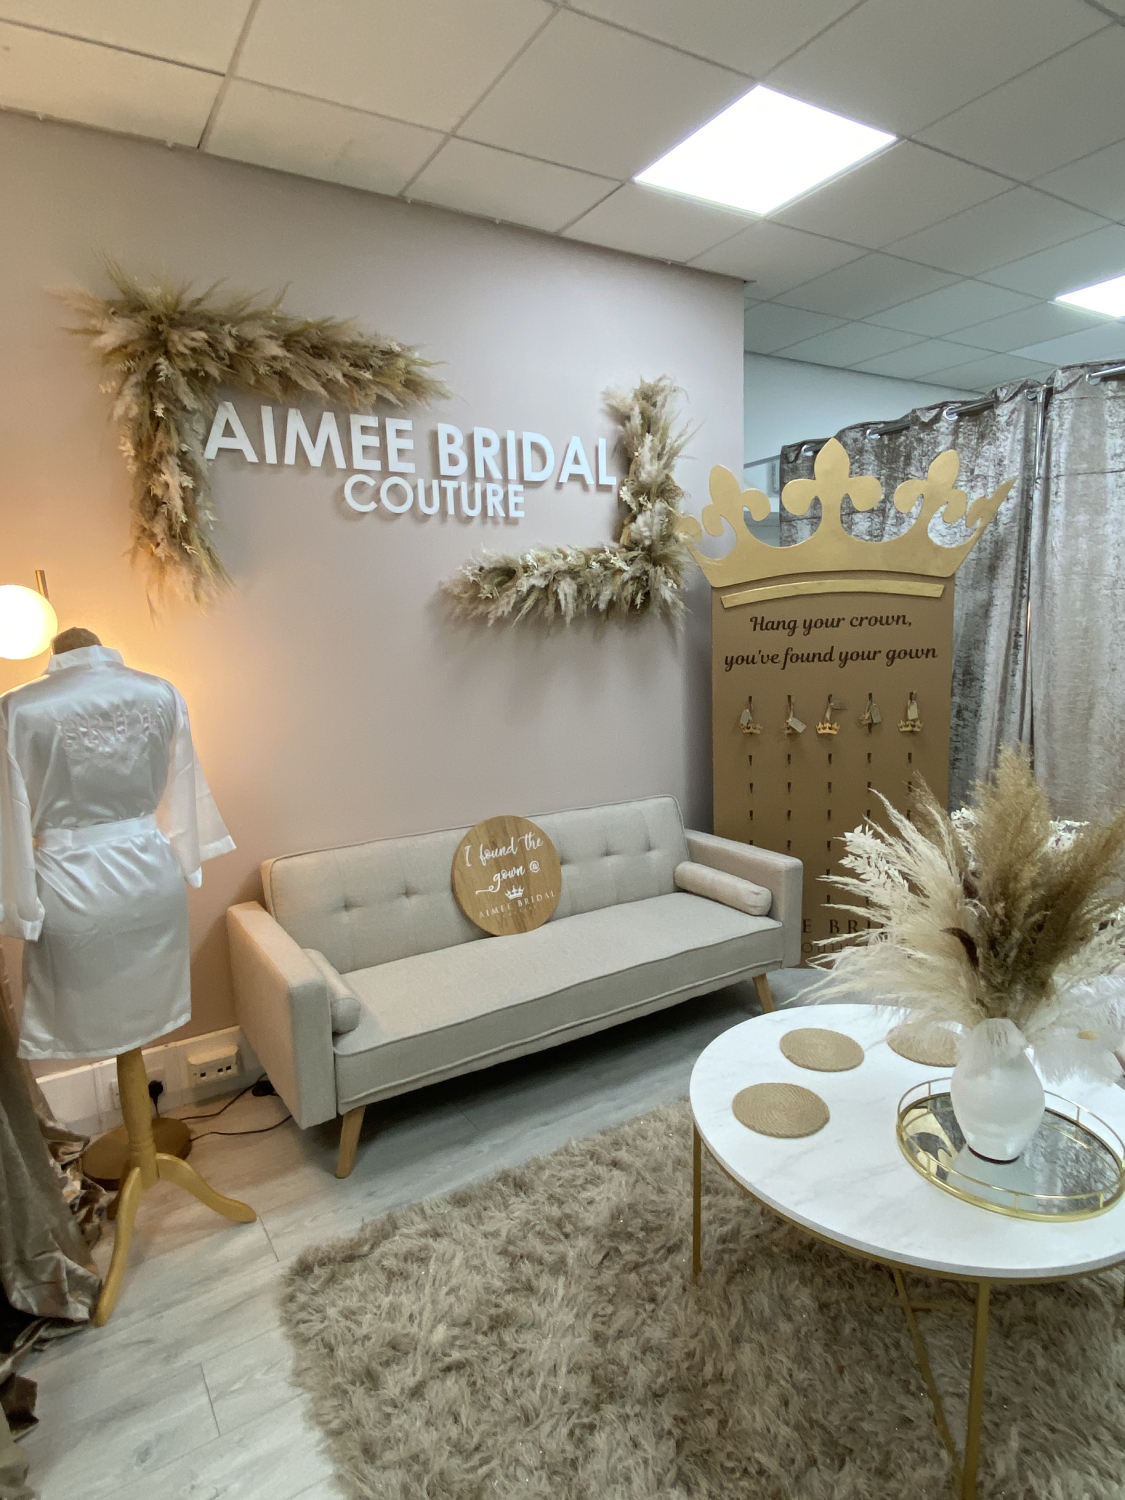 Aimee Bridal Couture Shop